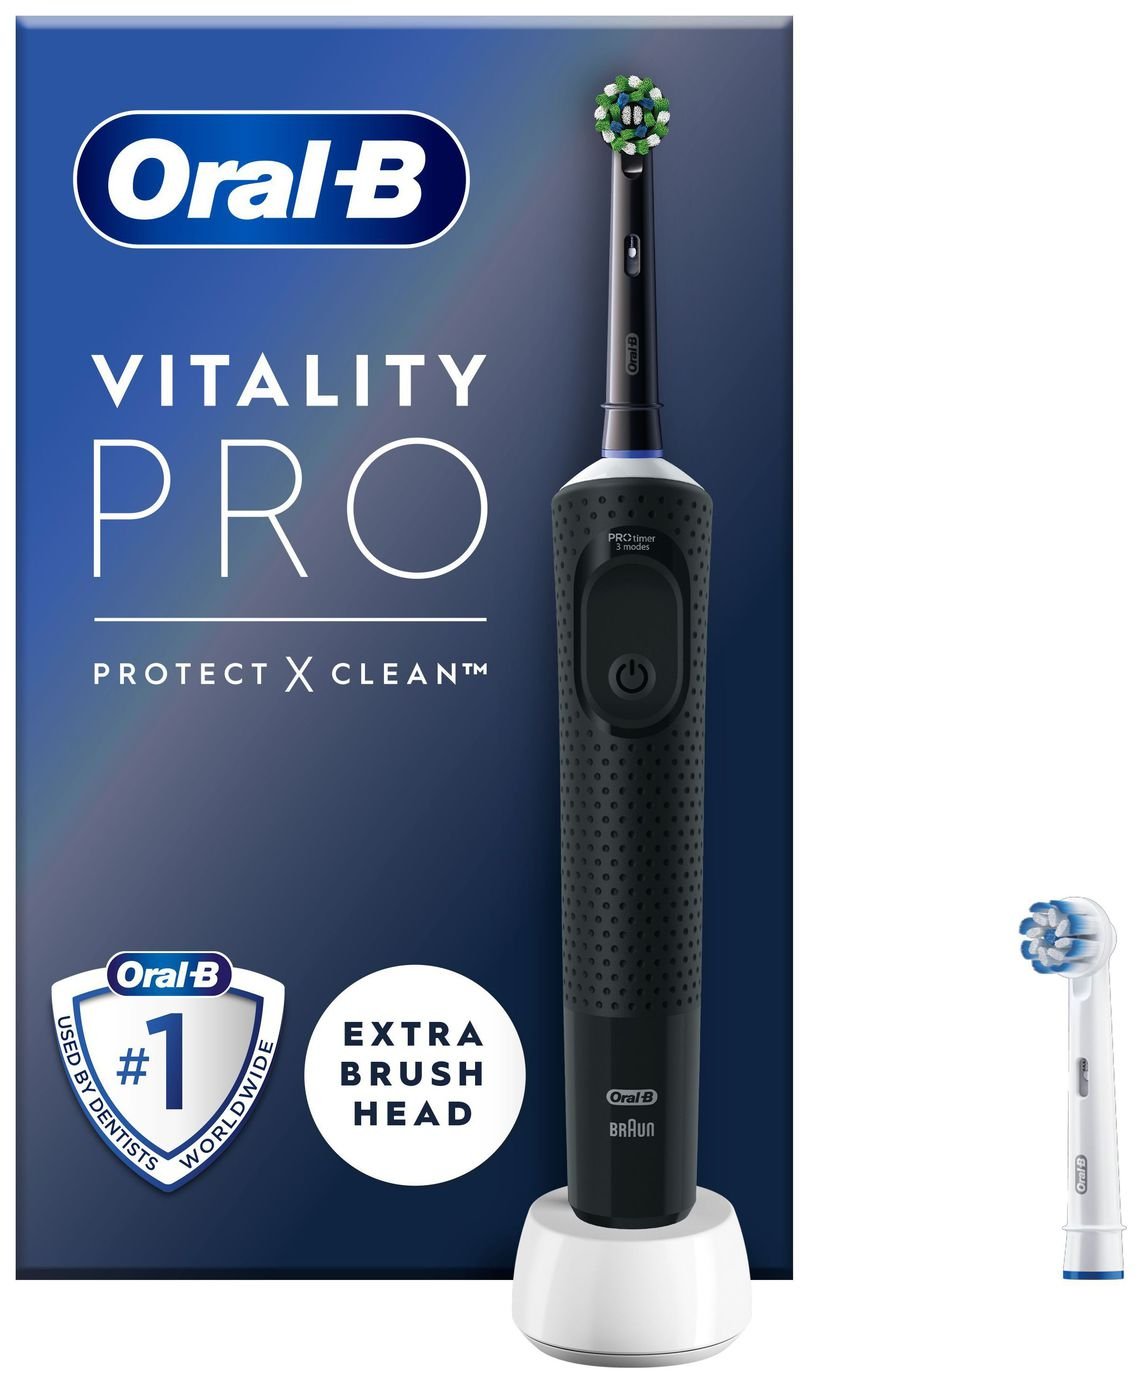 Oral-B Vitality Pro Electric Toothbrush - Black